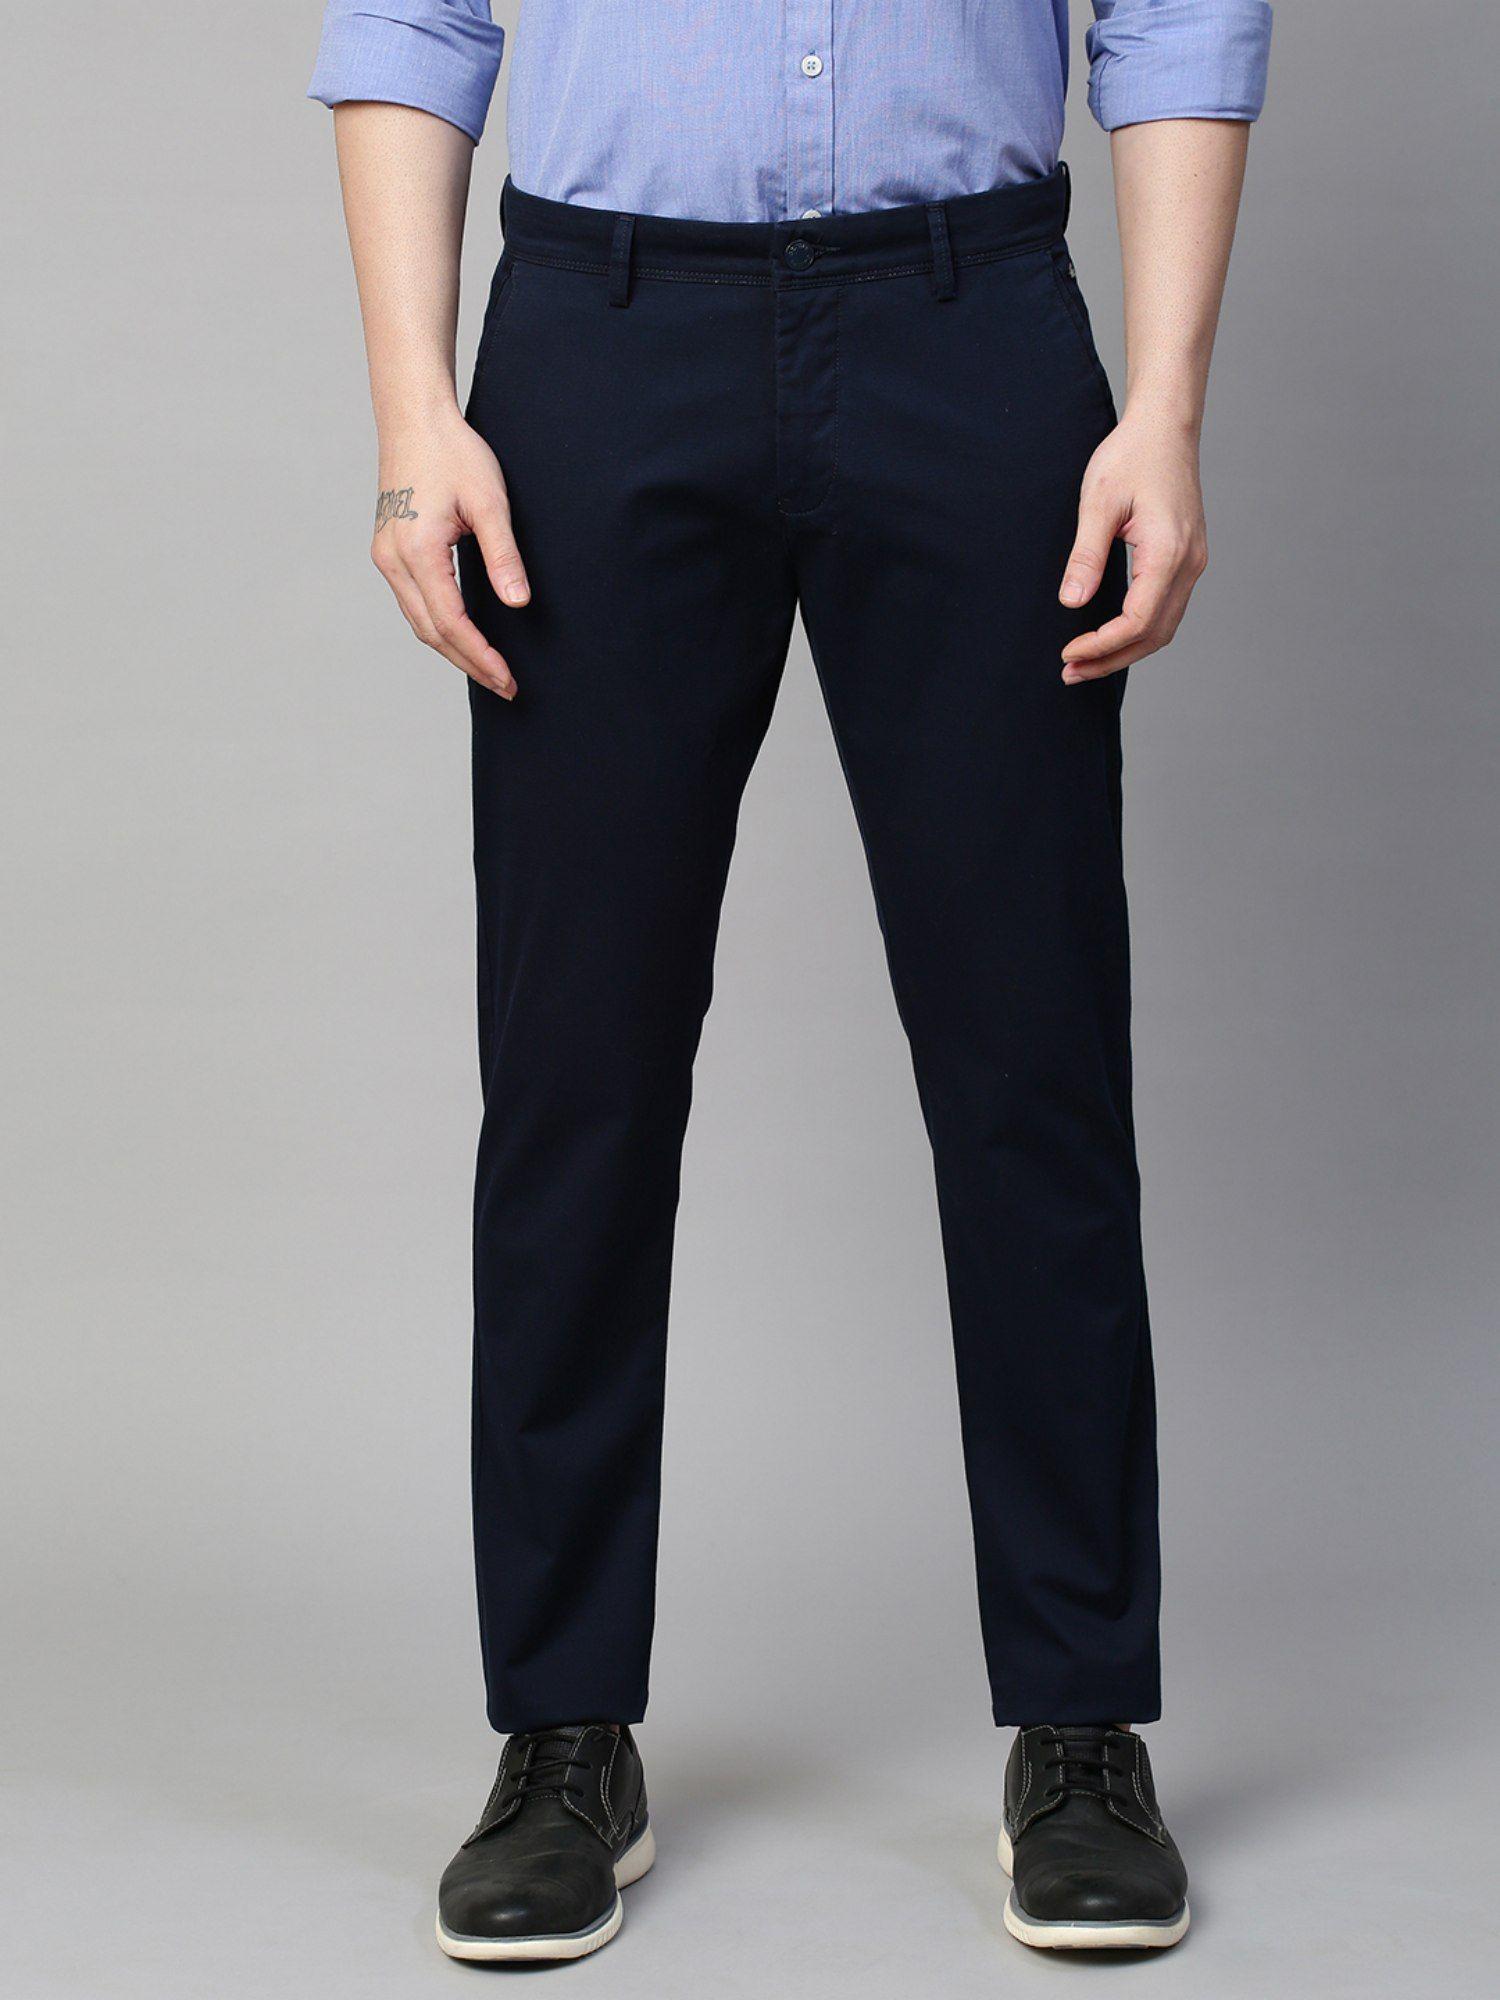 men's cotton stretch caribbean slim fit solid navy color trousers